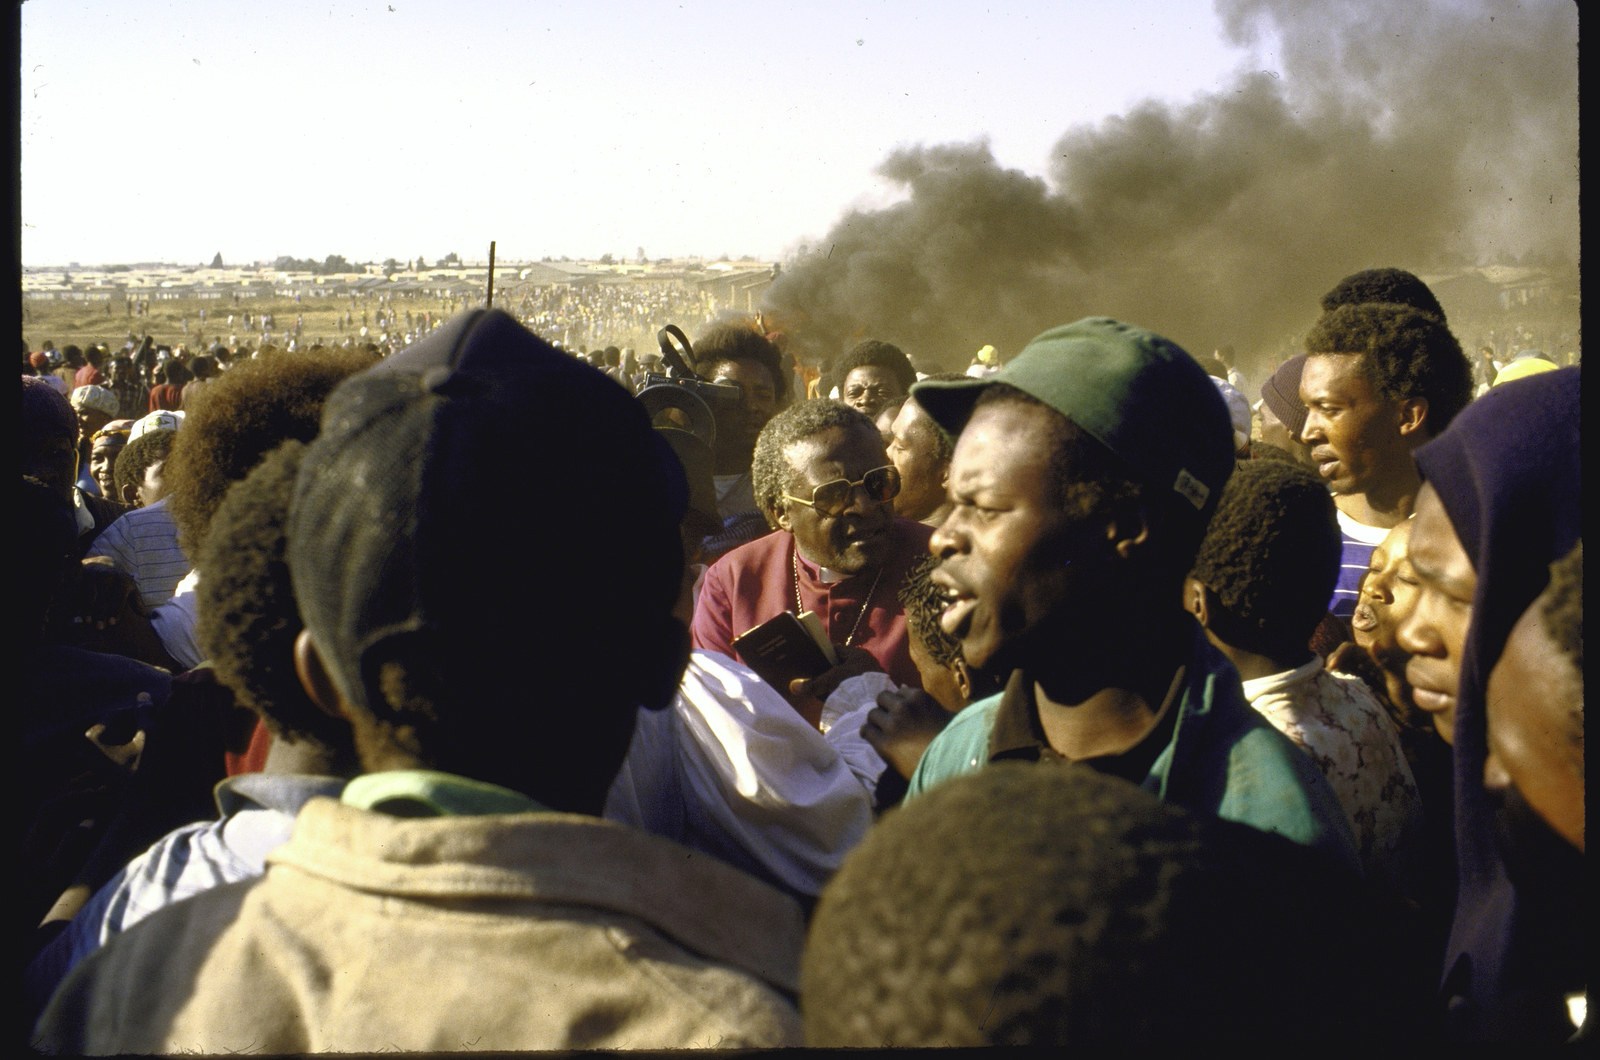 Tutu amid a crowd of people